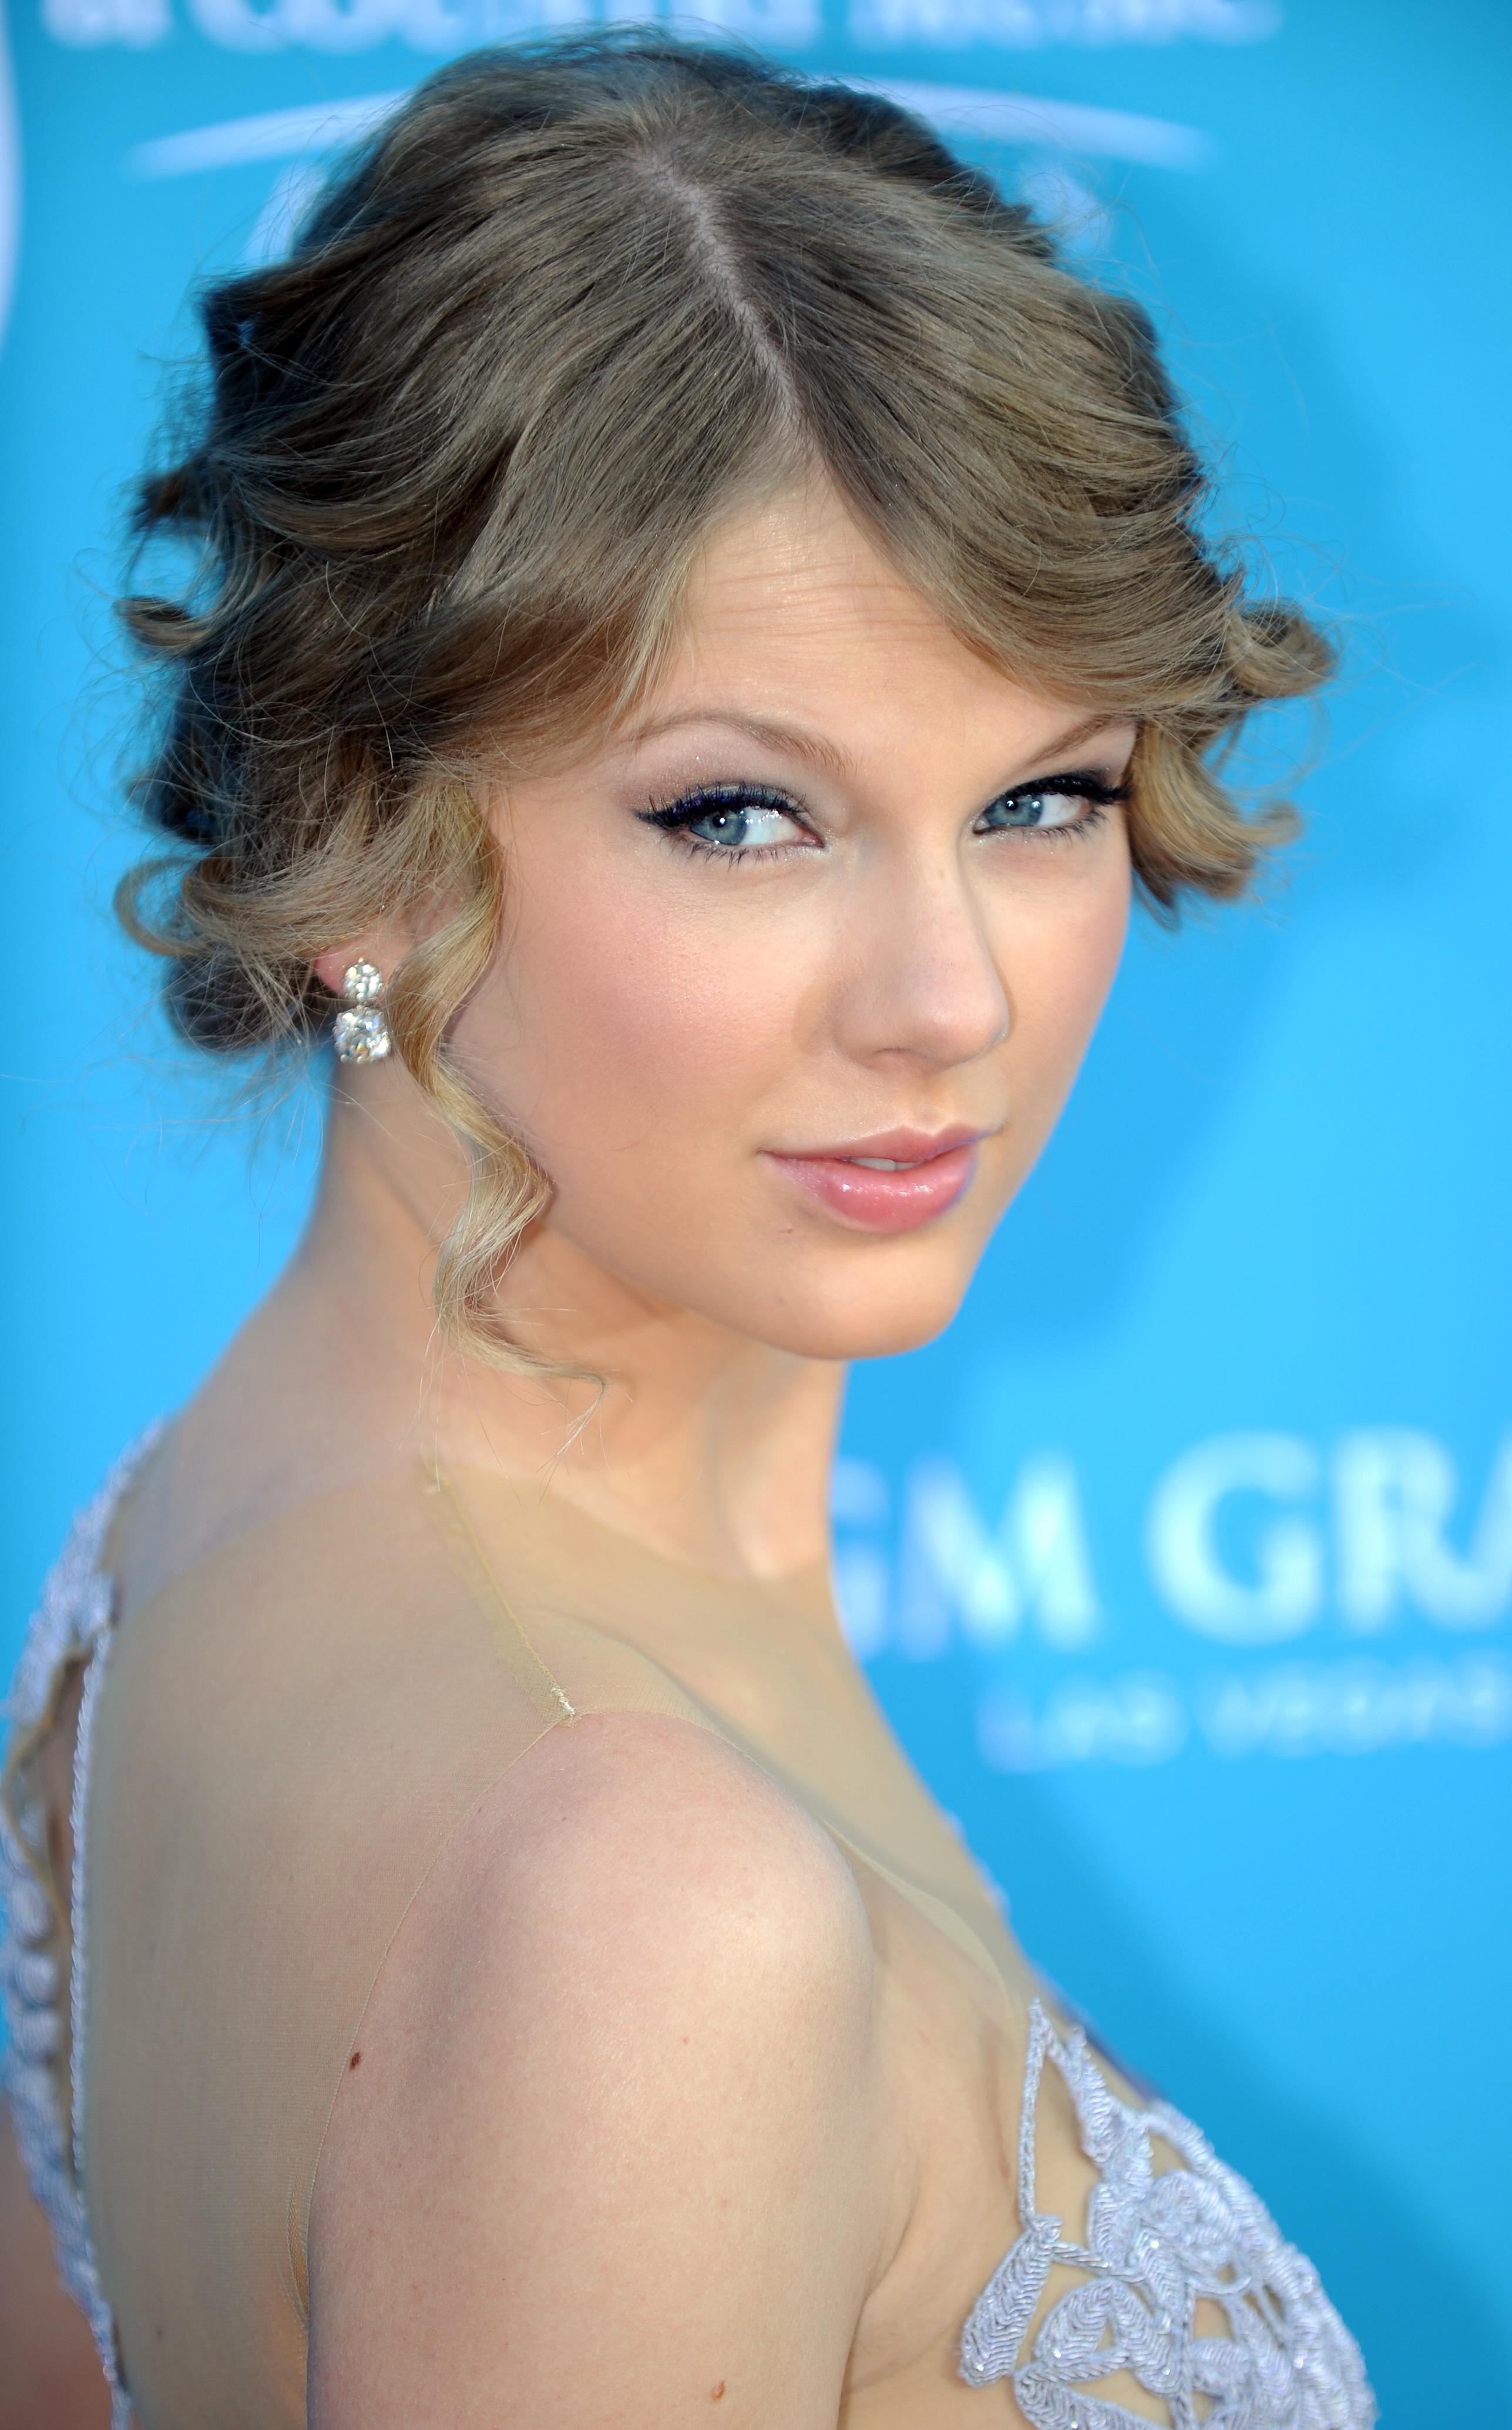 Singer Taylor Swift 